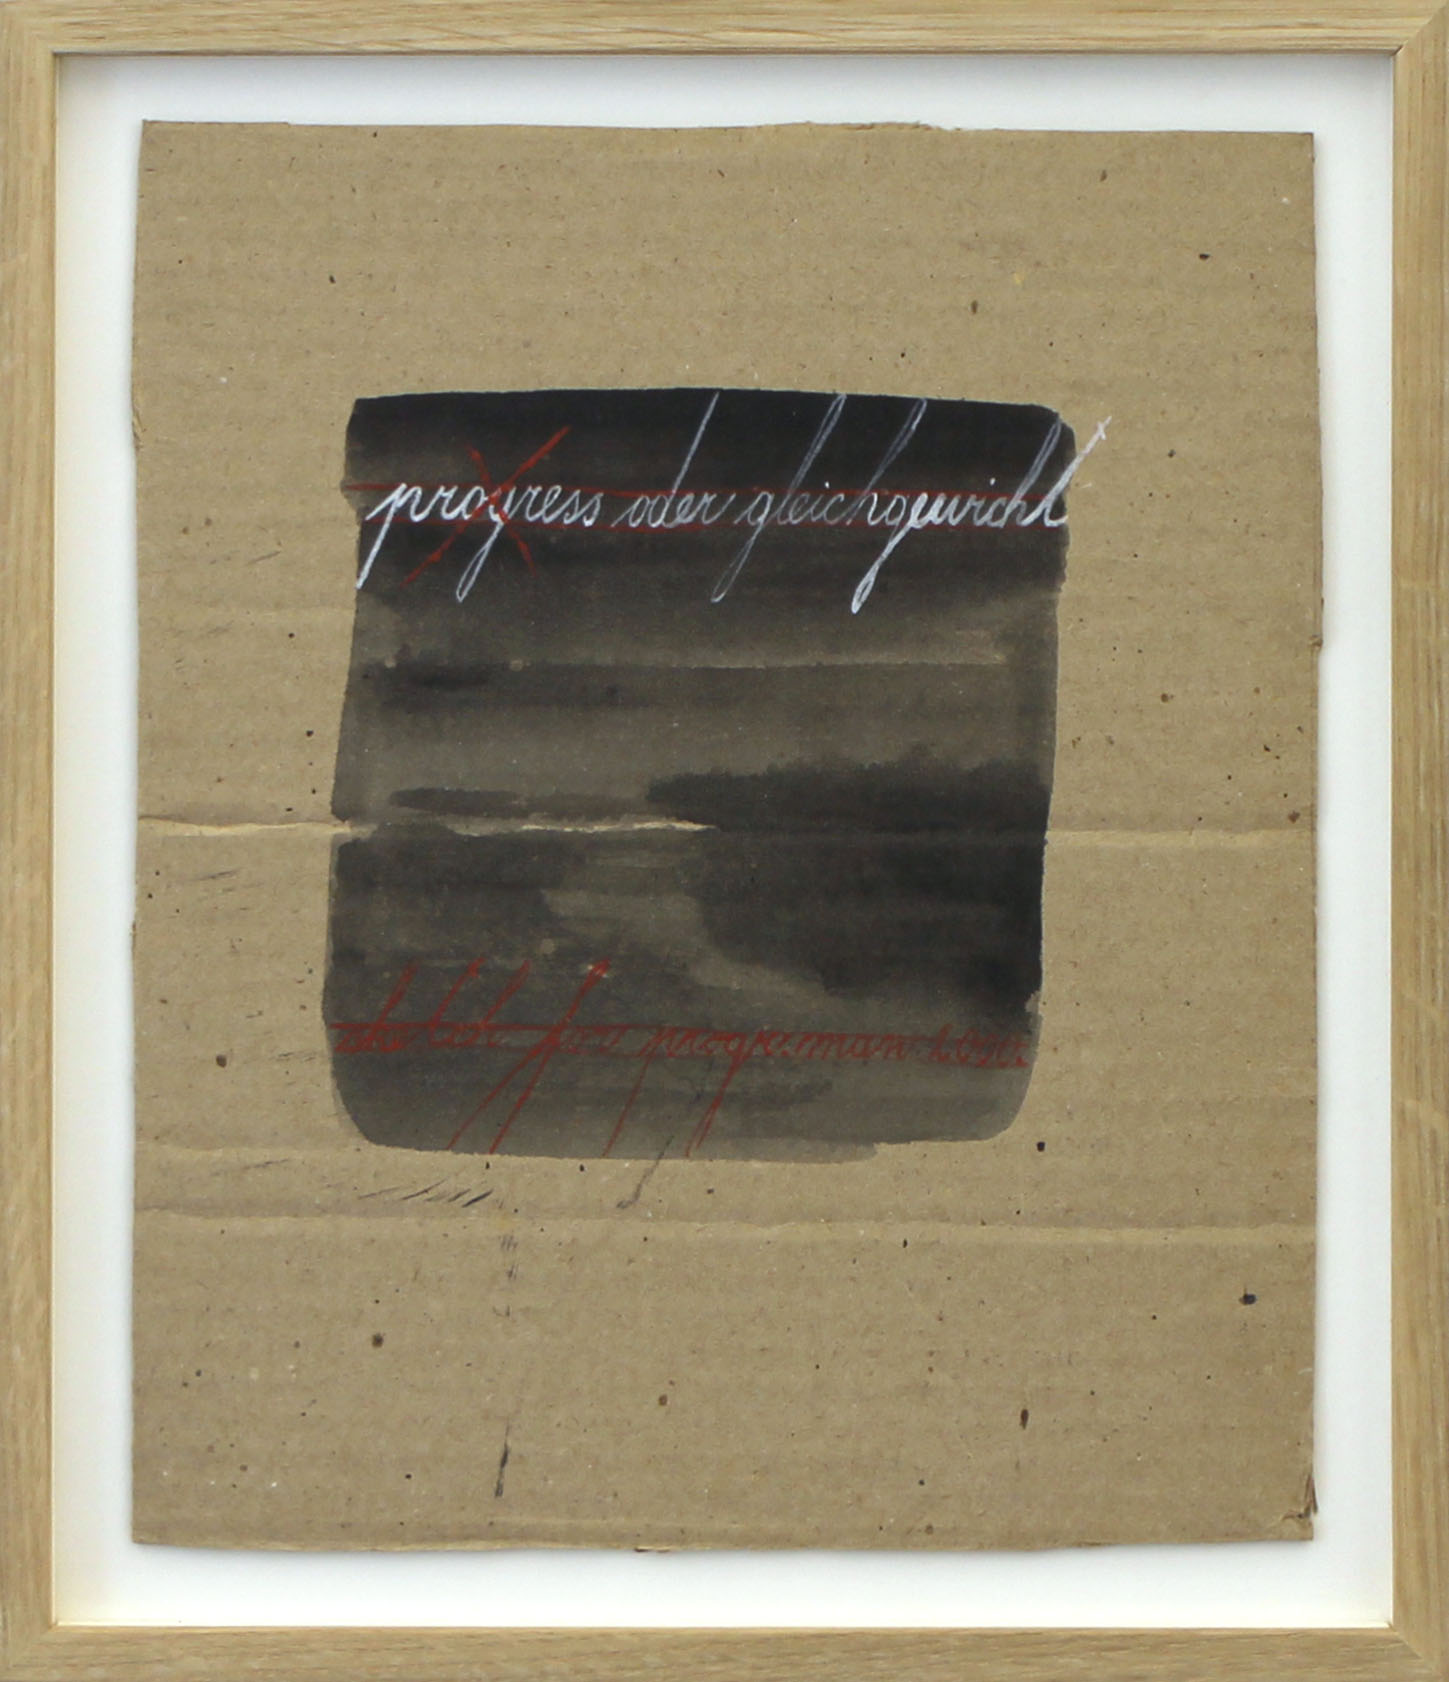 Progress oder gleichgewicht, watercolor on cardboard, 24.6 x 20.2 cm, 1970 